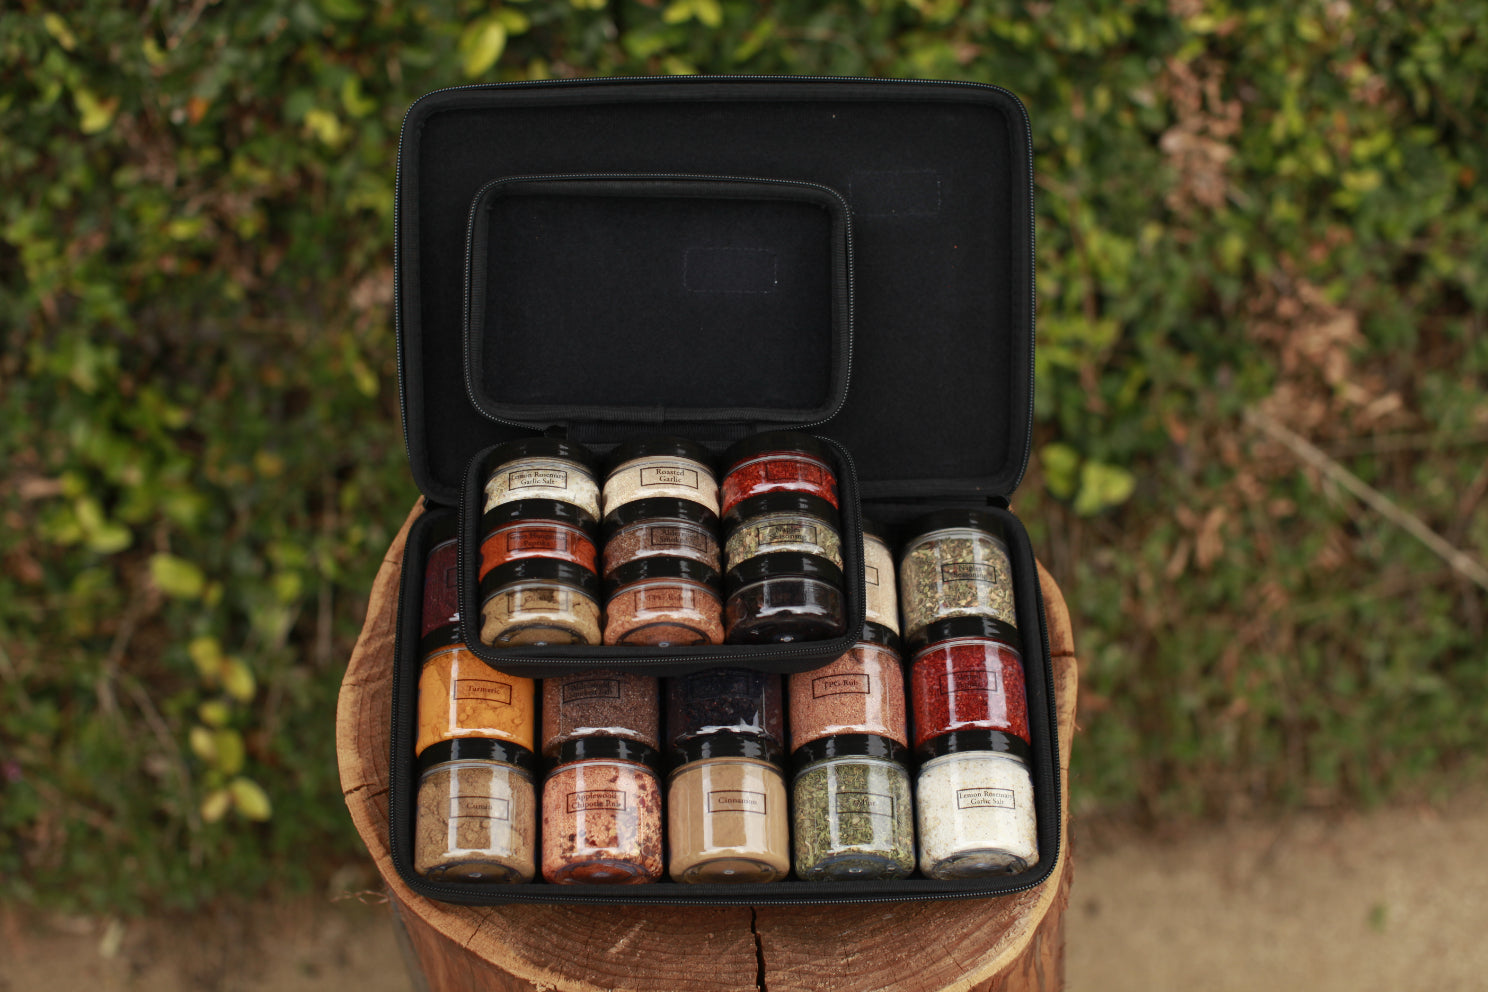 Pocket Spice Box – Townsends